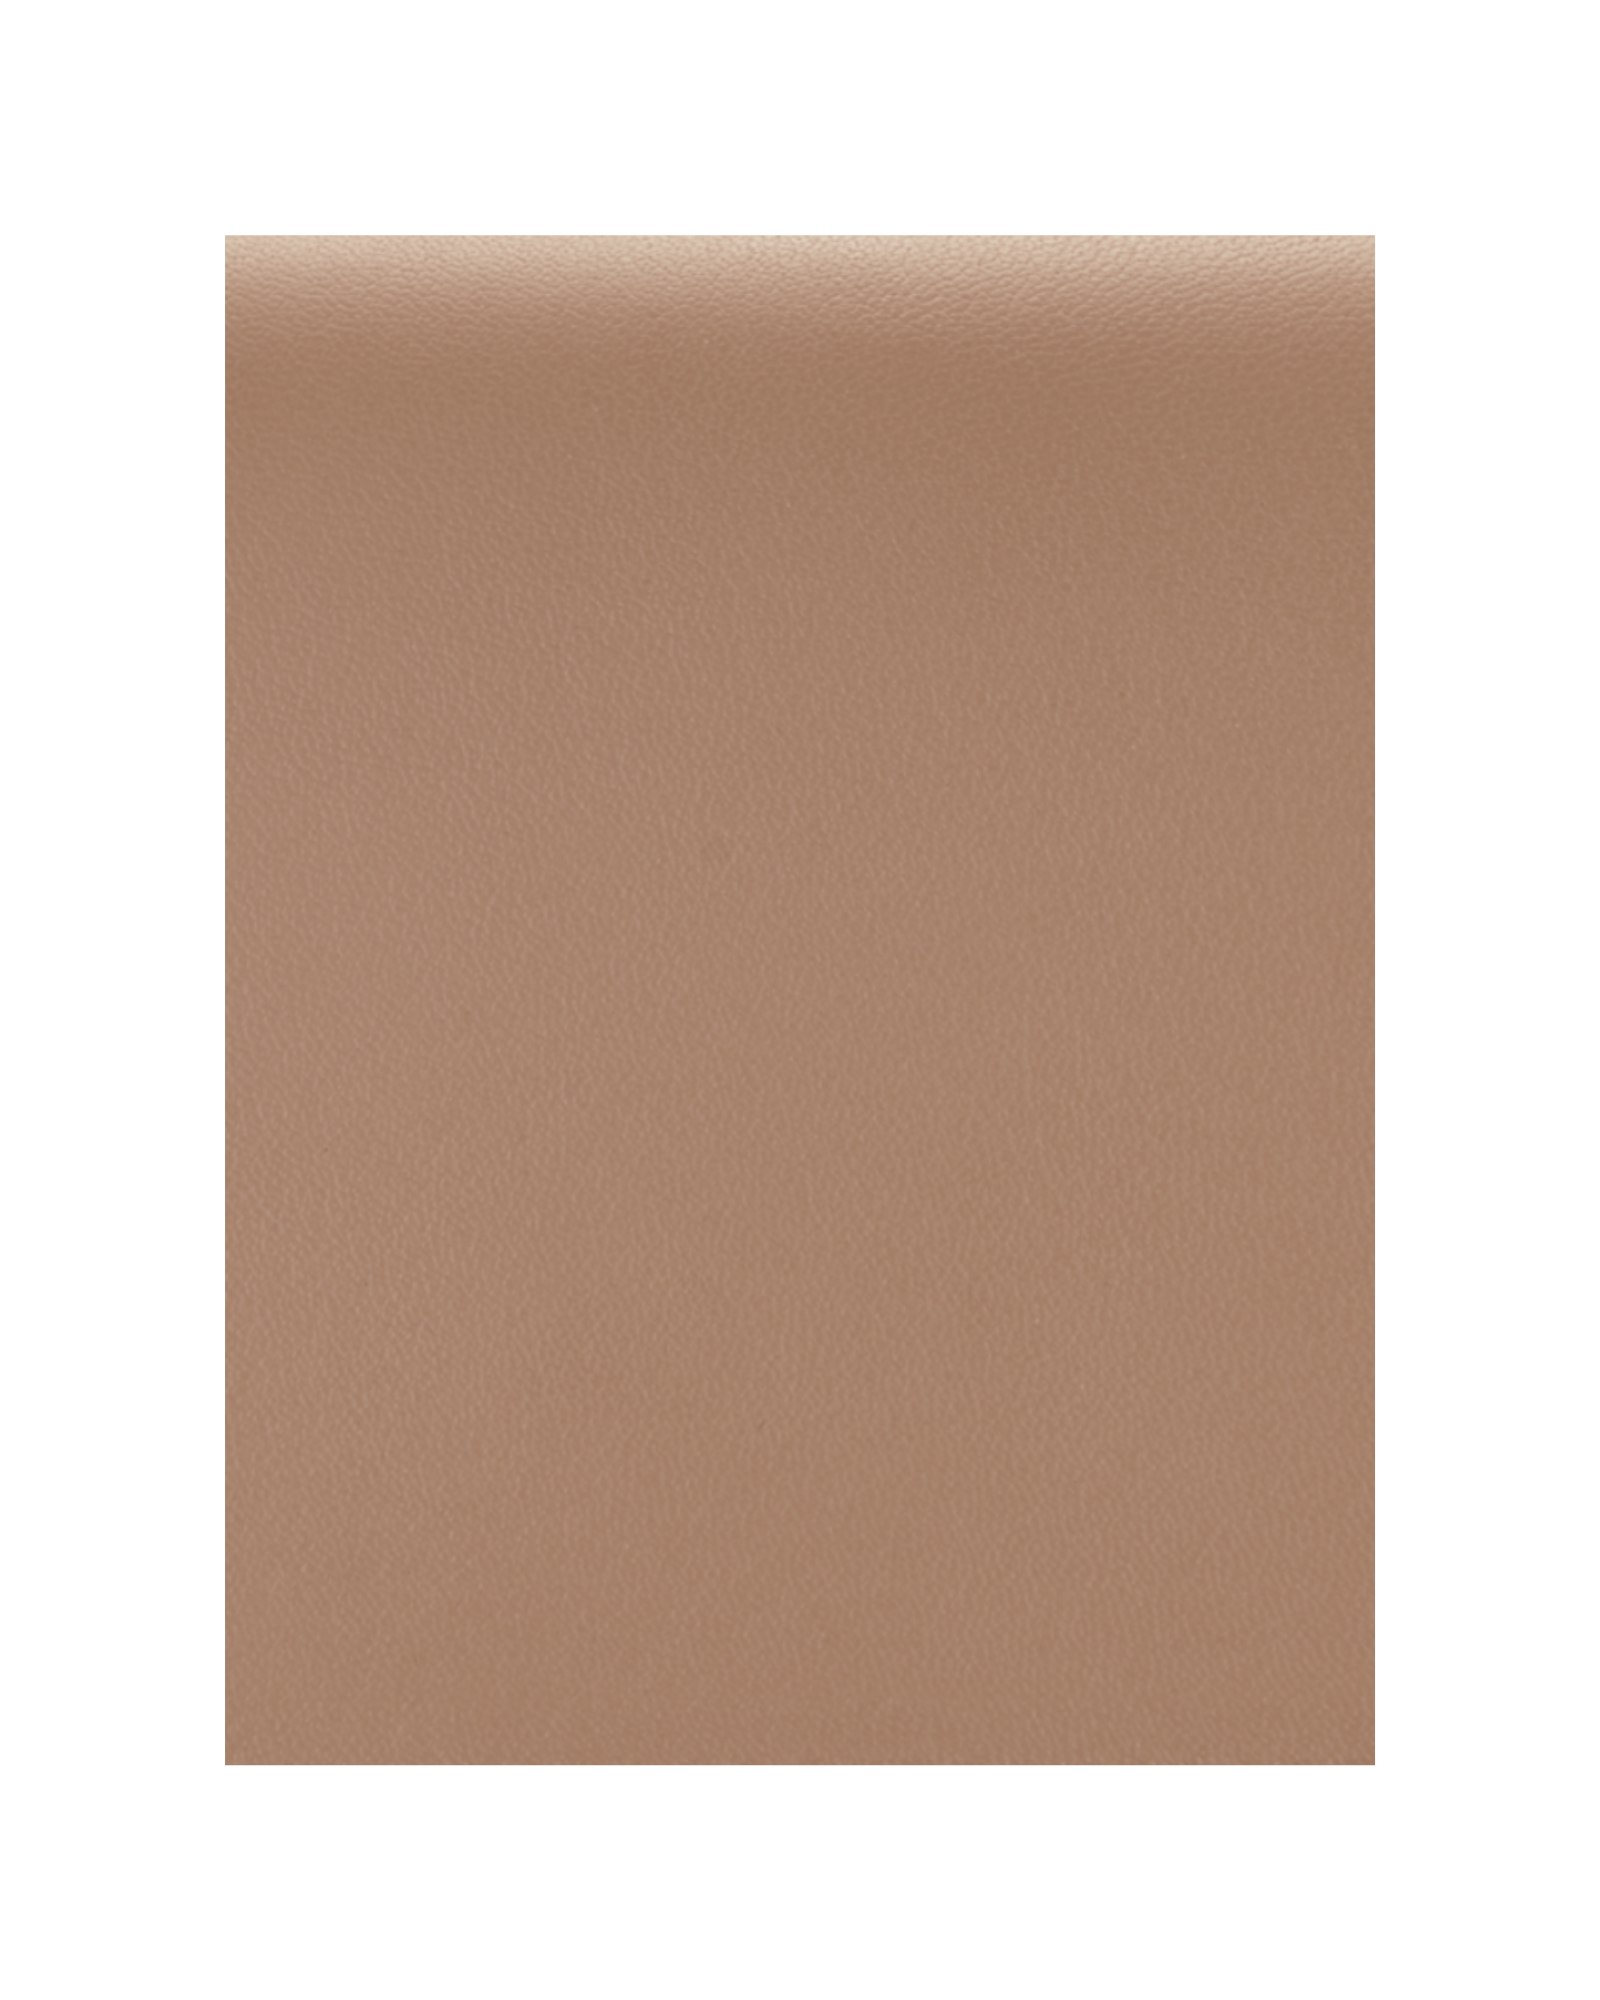 Tan Leather image